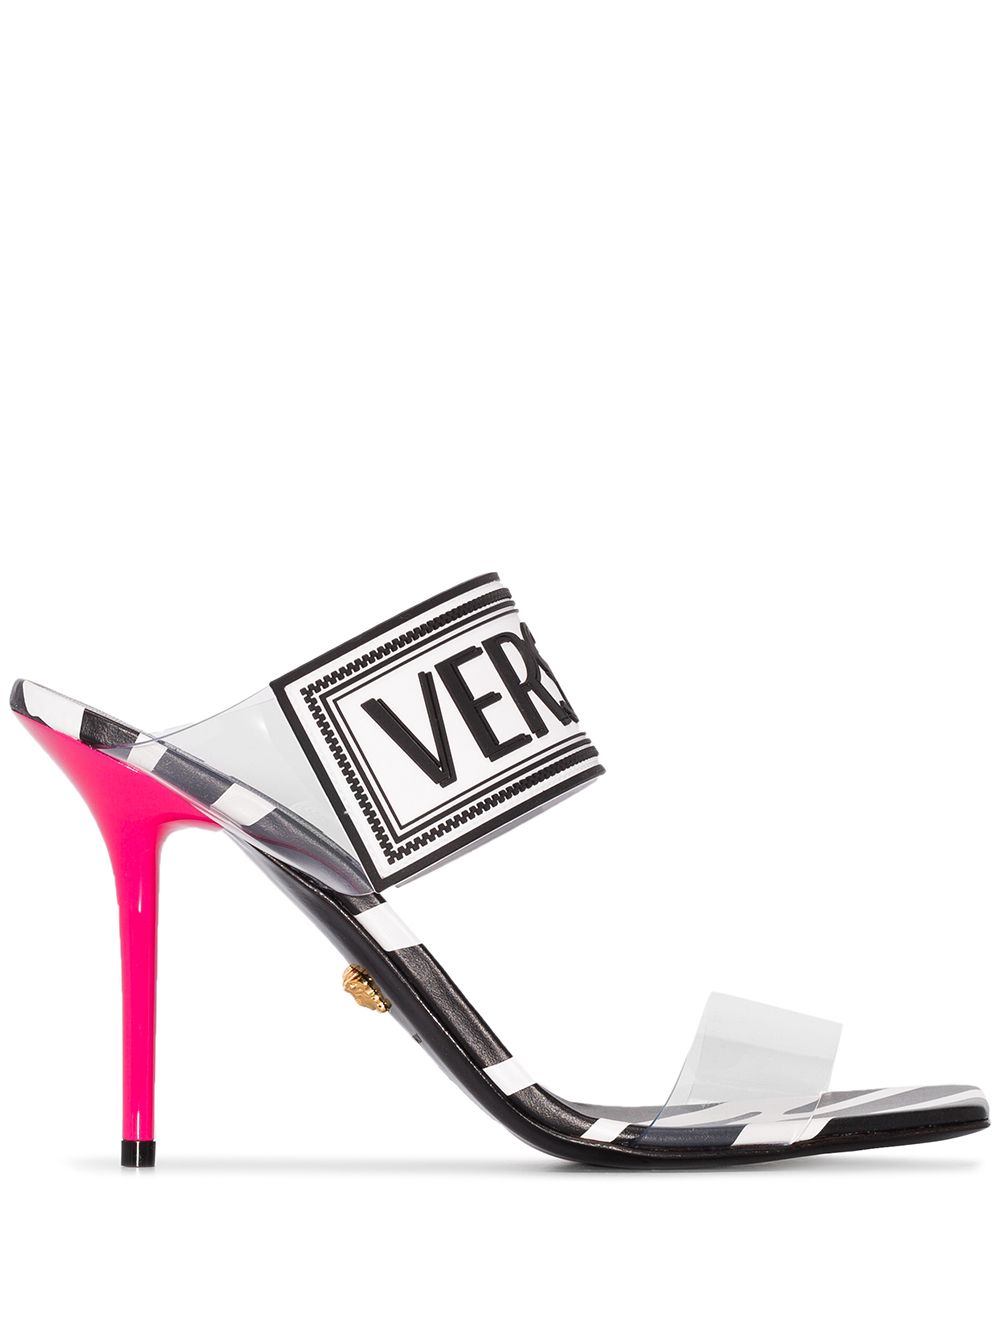 фото Versace босоножки из ПВХ с логотипом и зебовым узором